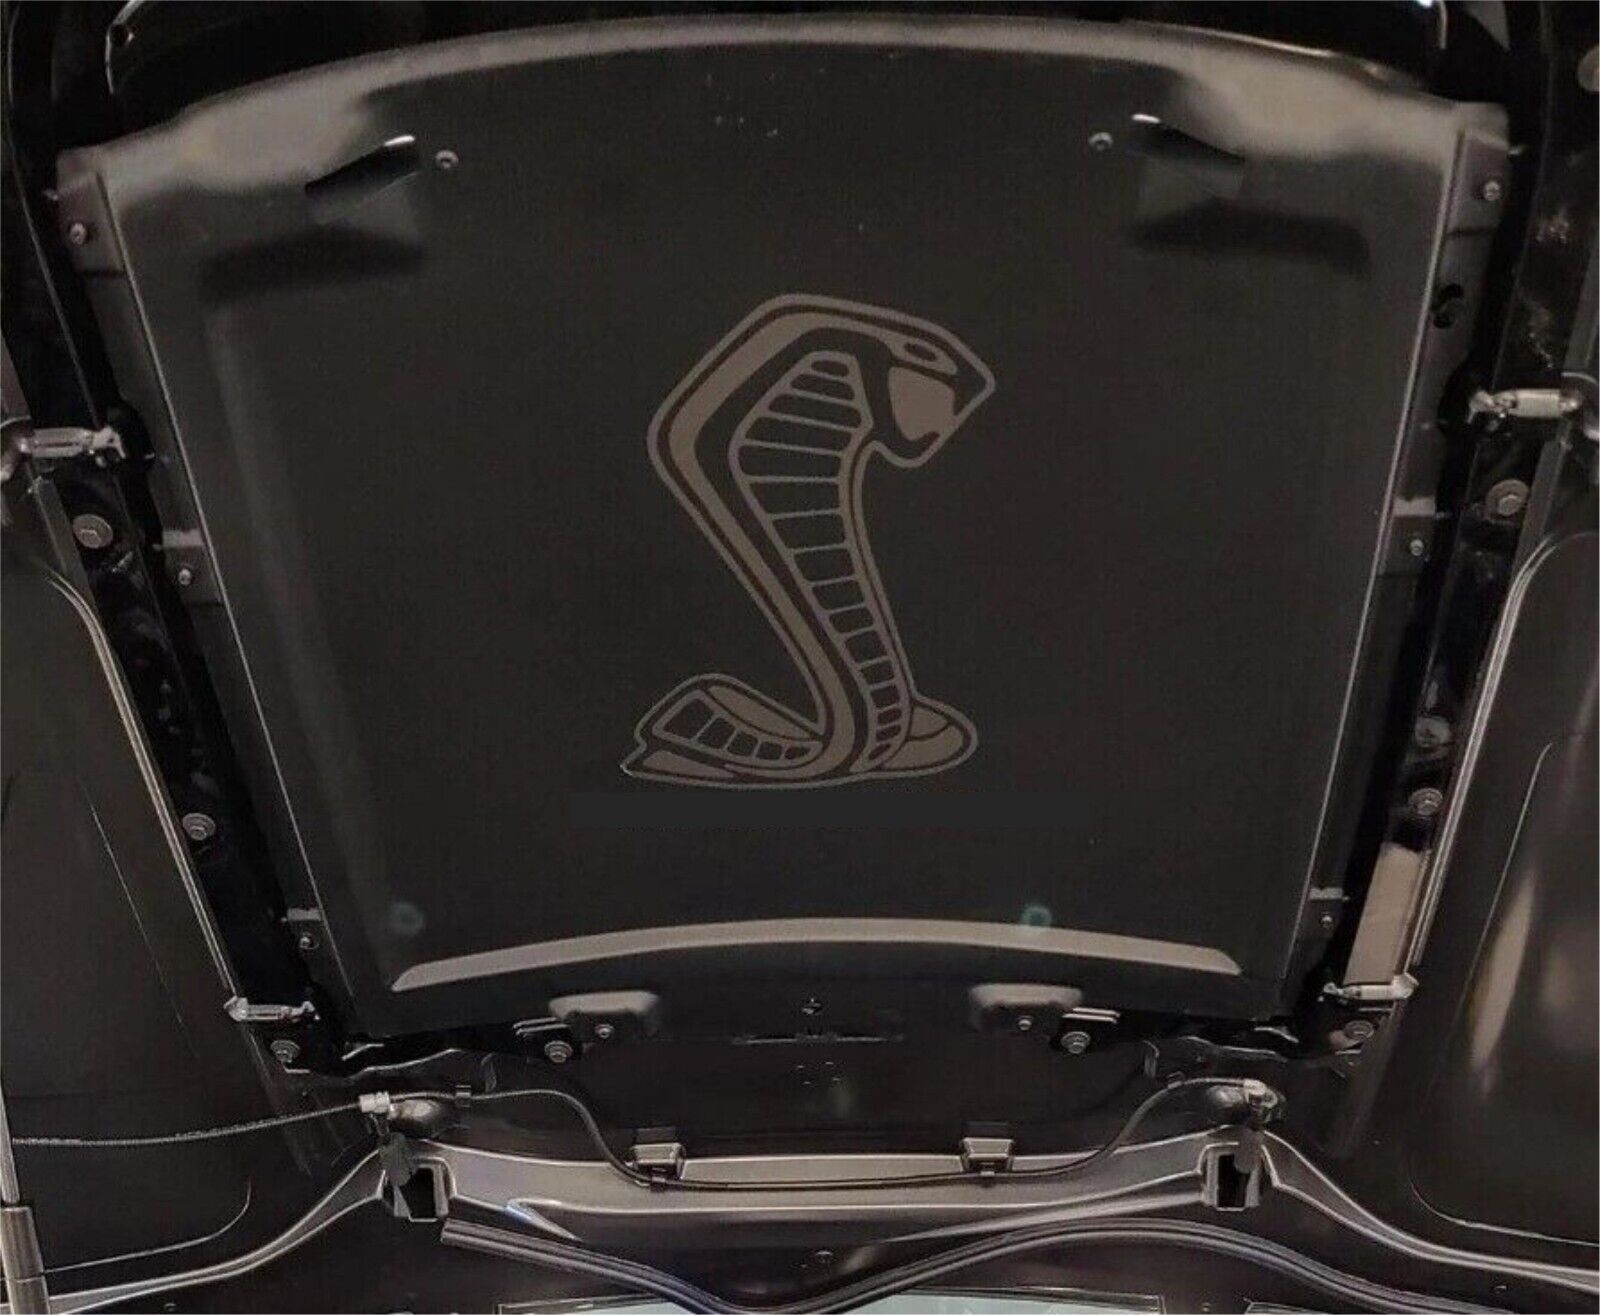 Shelby Cobra, Mustang under hood, rear glass decal 13x11